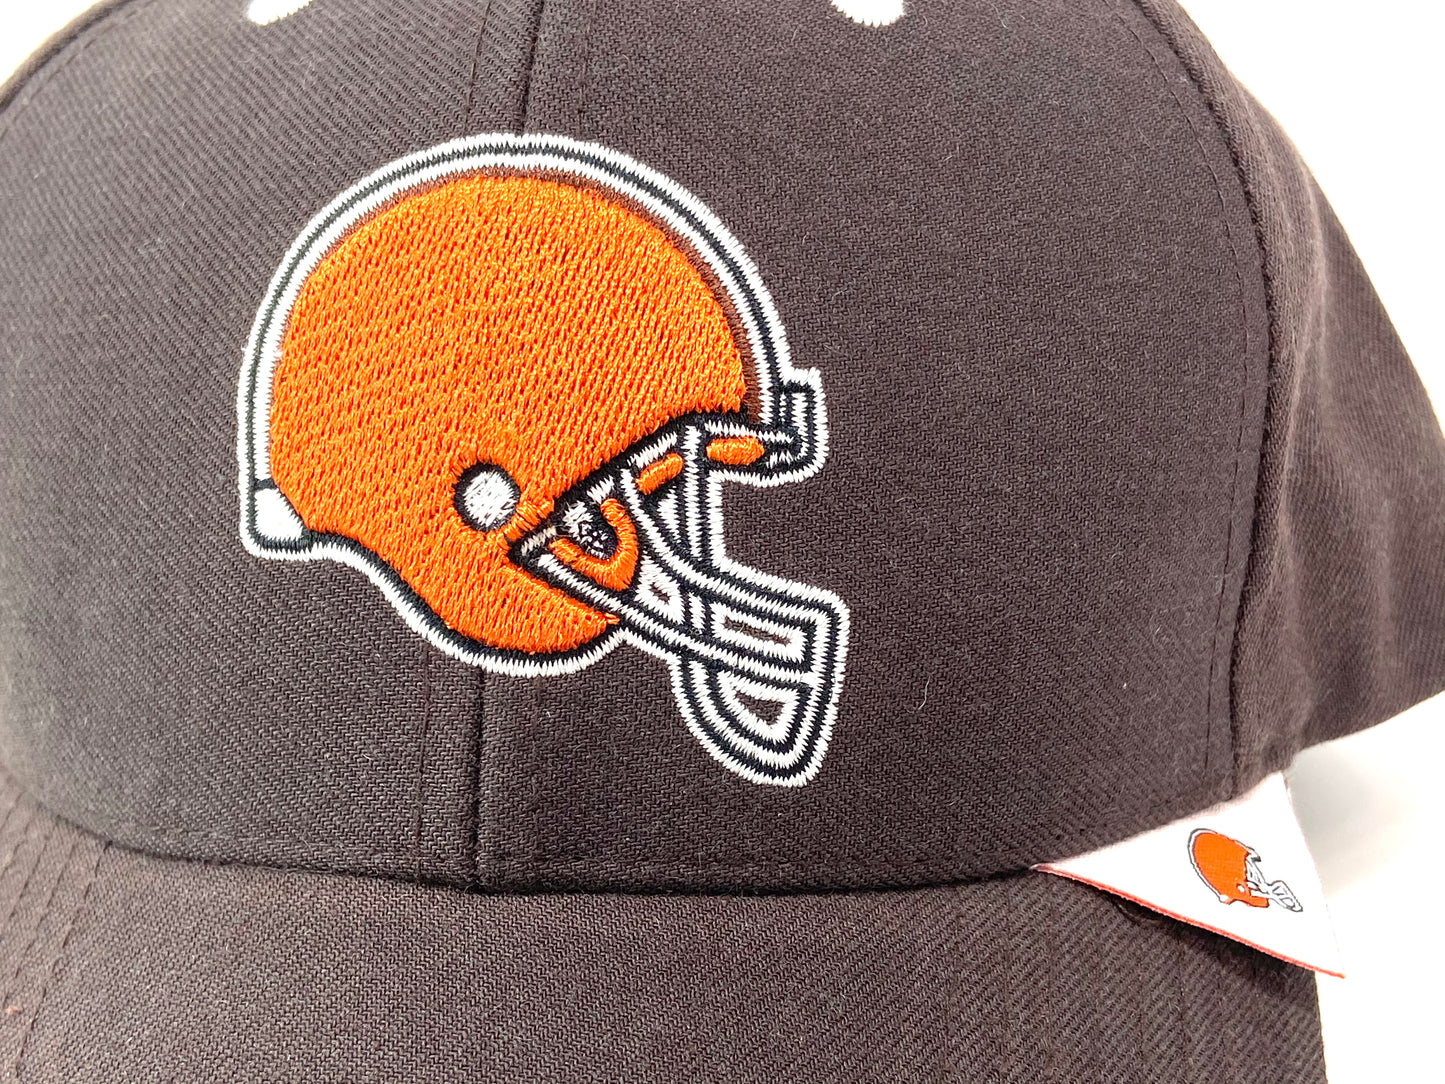 Cleveland Browns Vintage NFL 30% Wool 3-D Logo Cap By Twins Enterprise